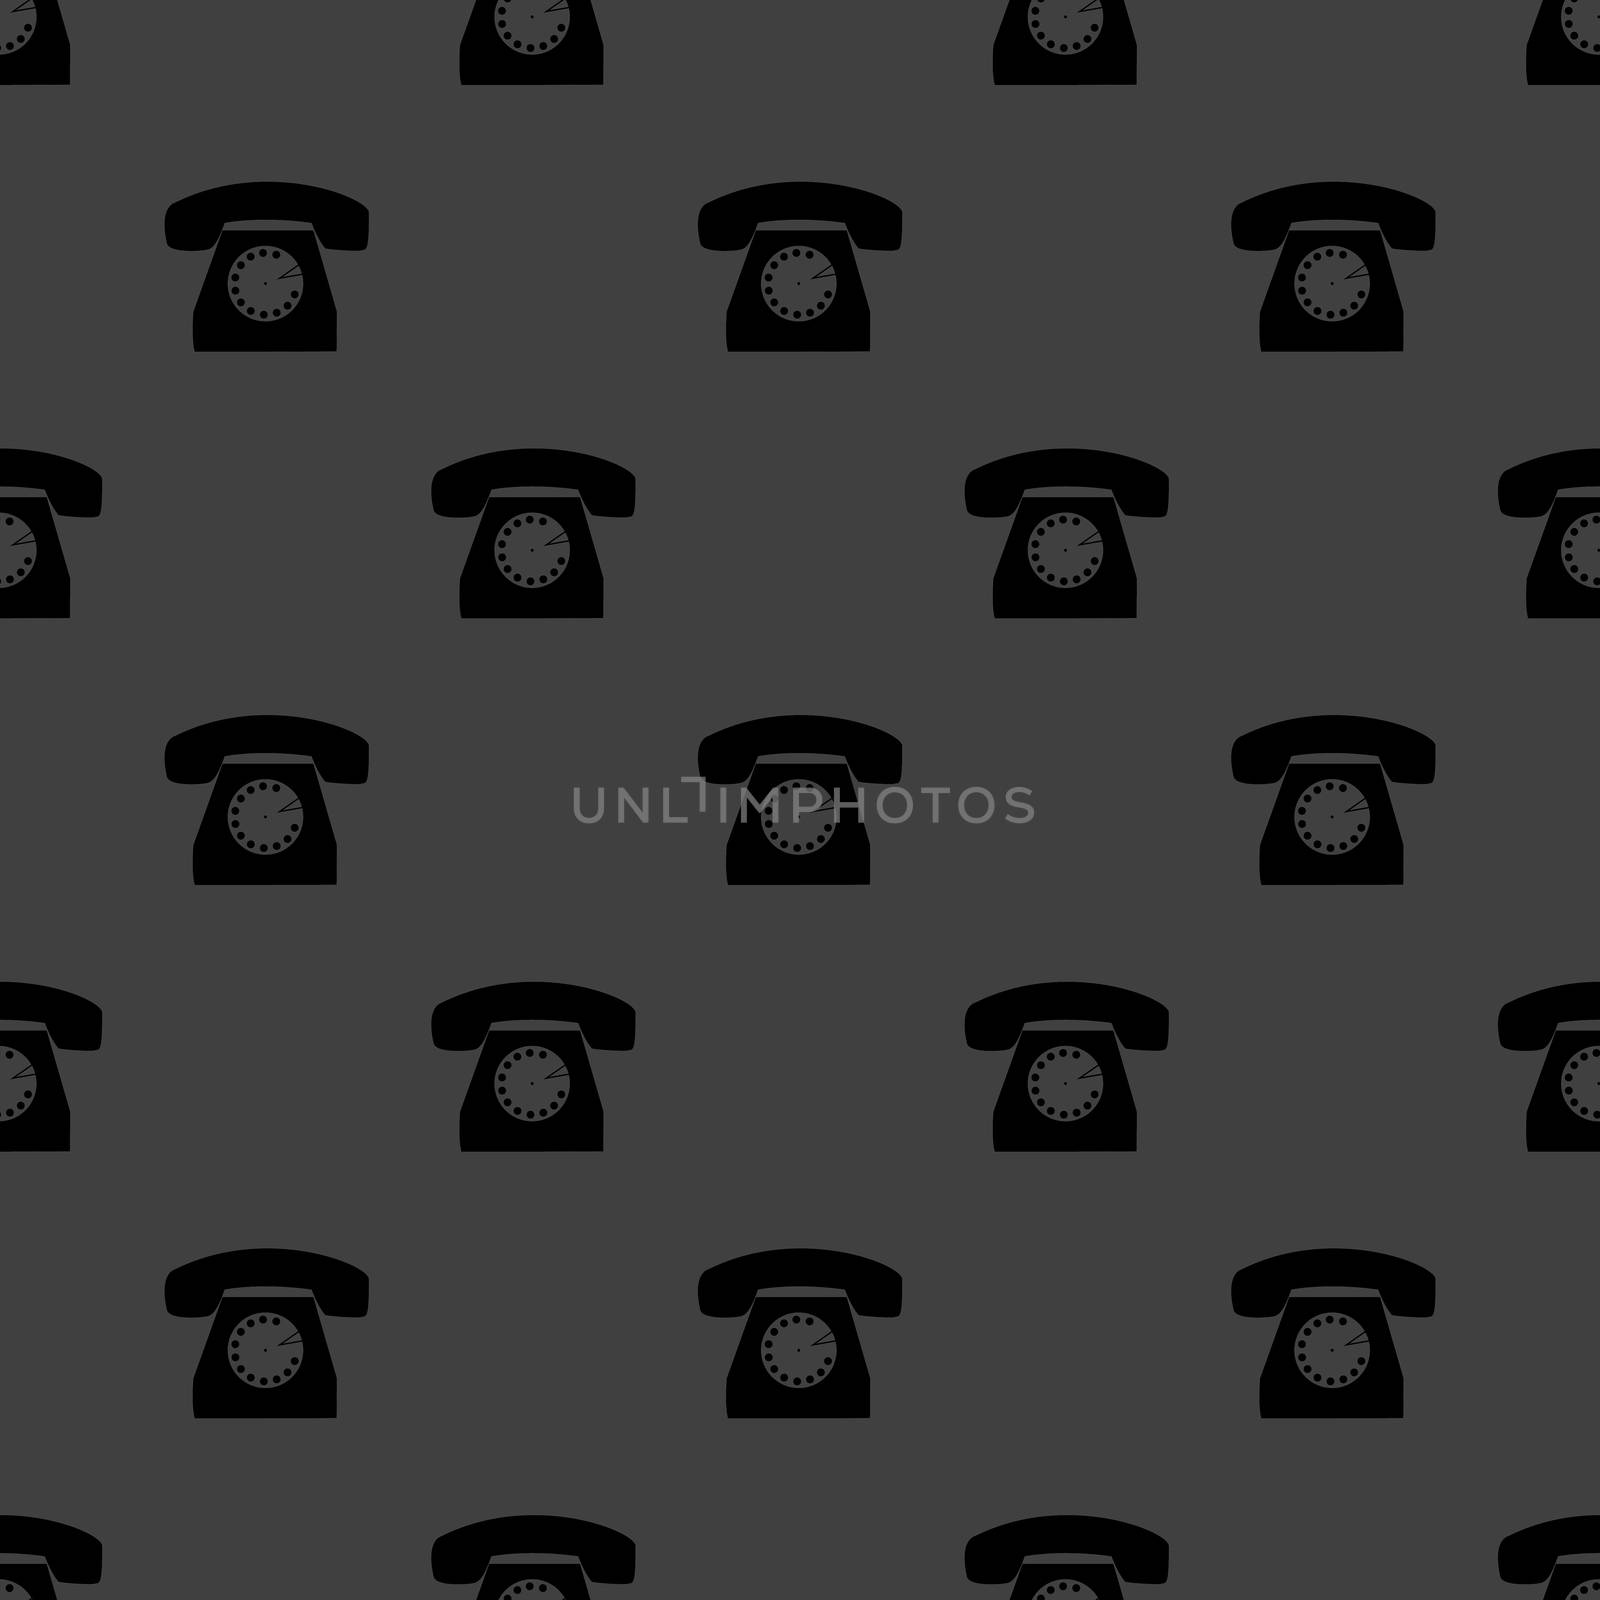 Retro telephone web icon. flat design. Seamless gray pattern. by serhii_lohvyniuk